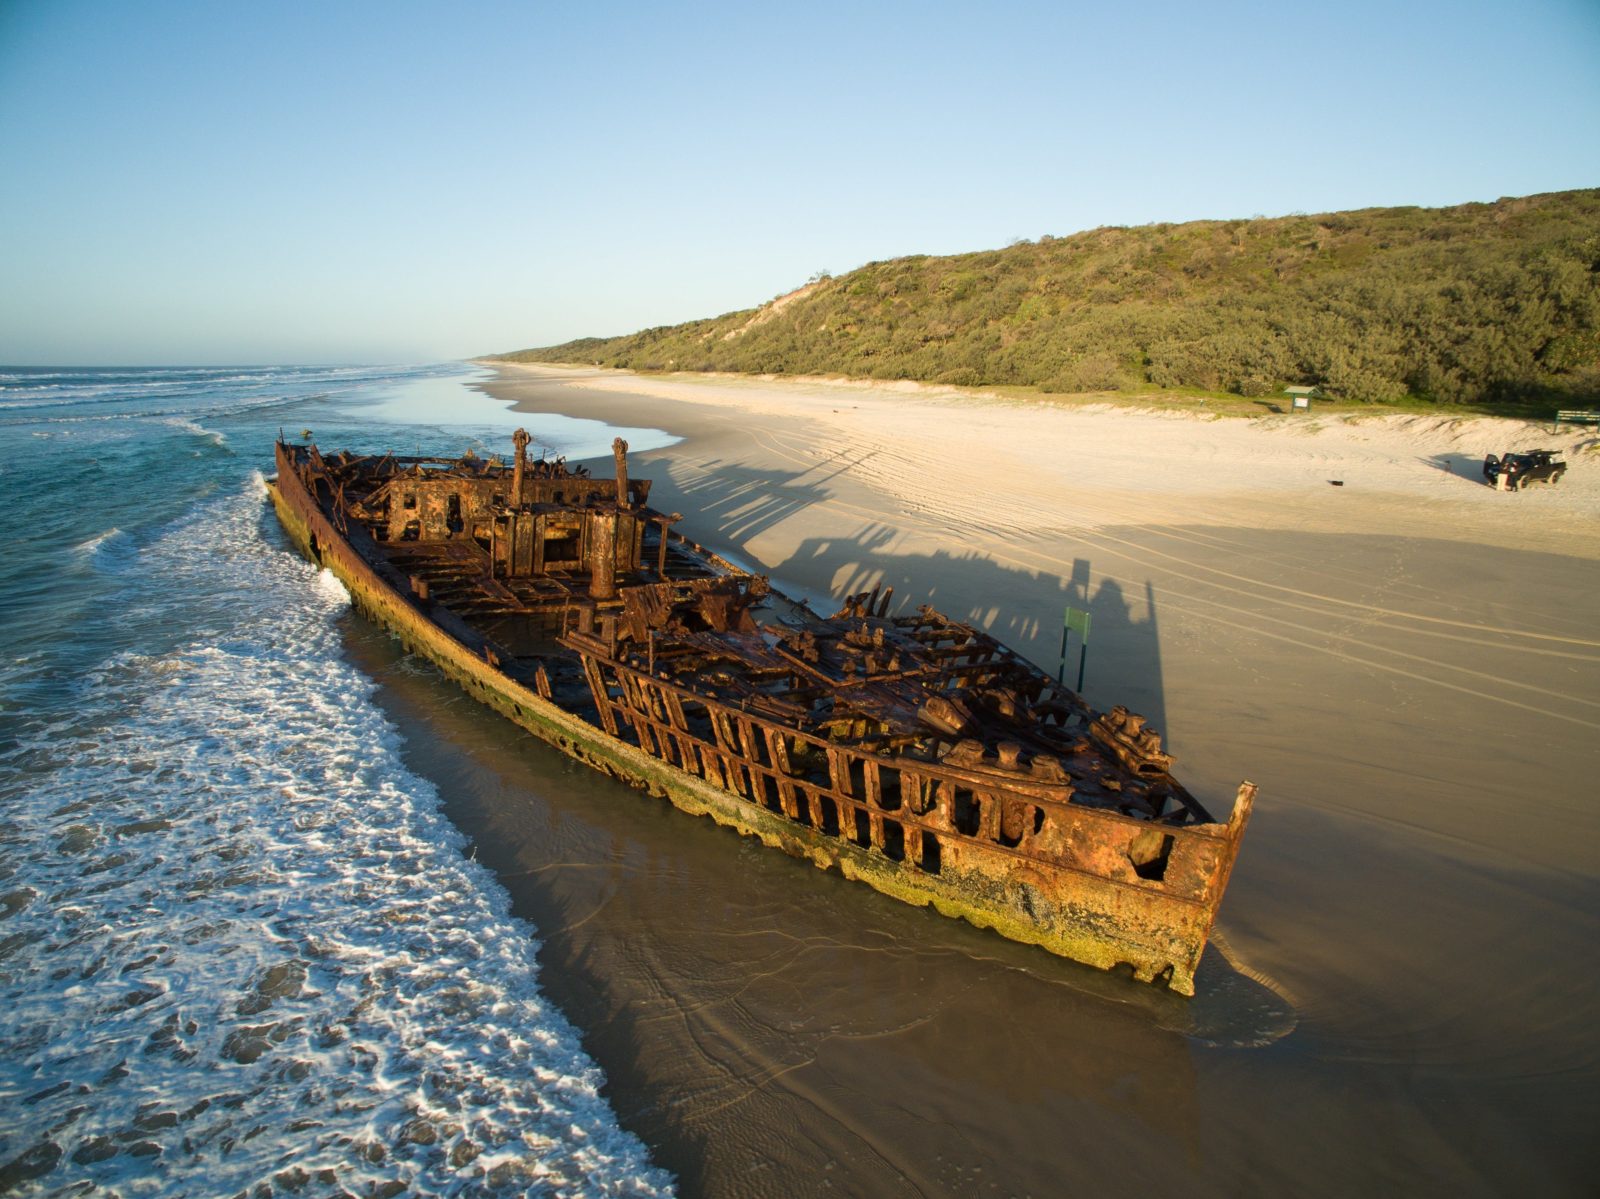 Maheno Ship Wreck - Fraser Island